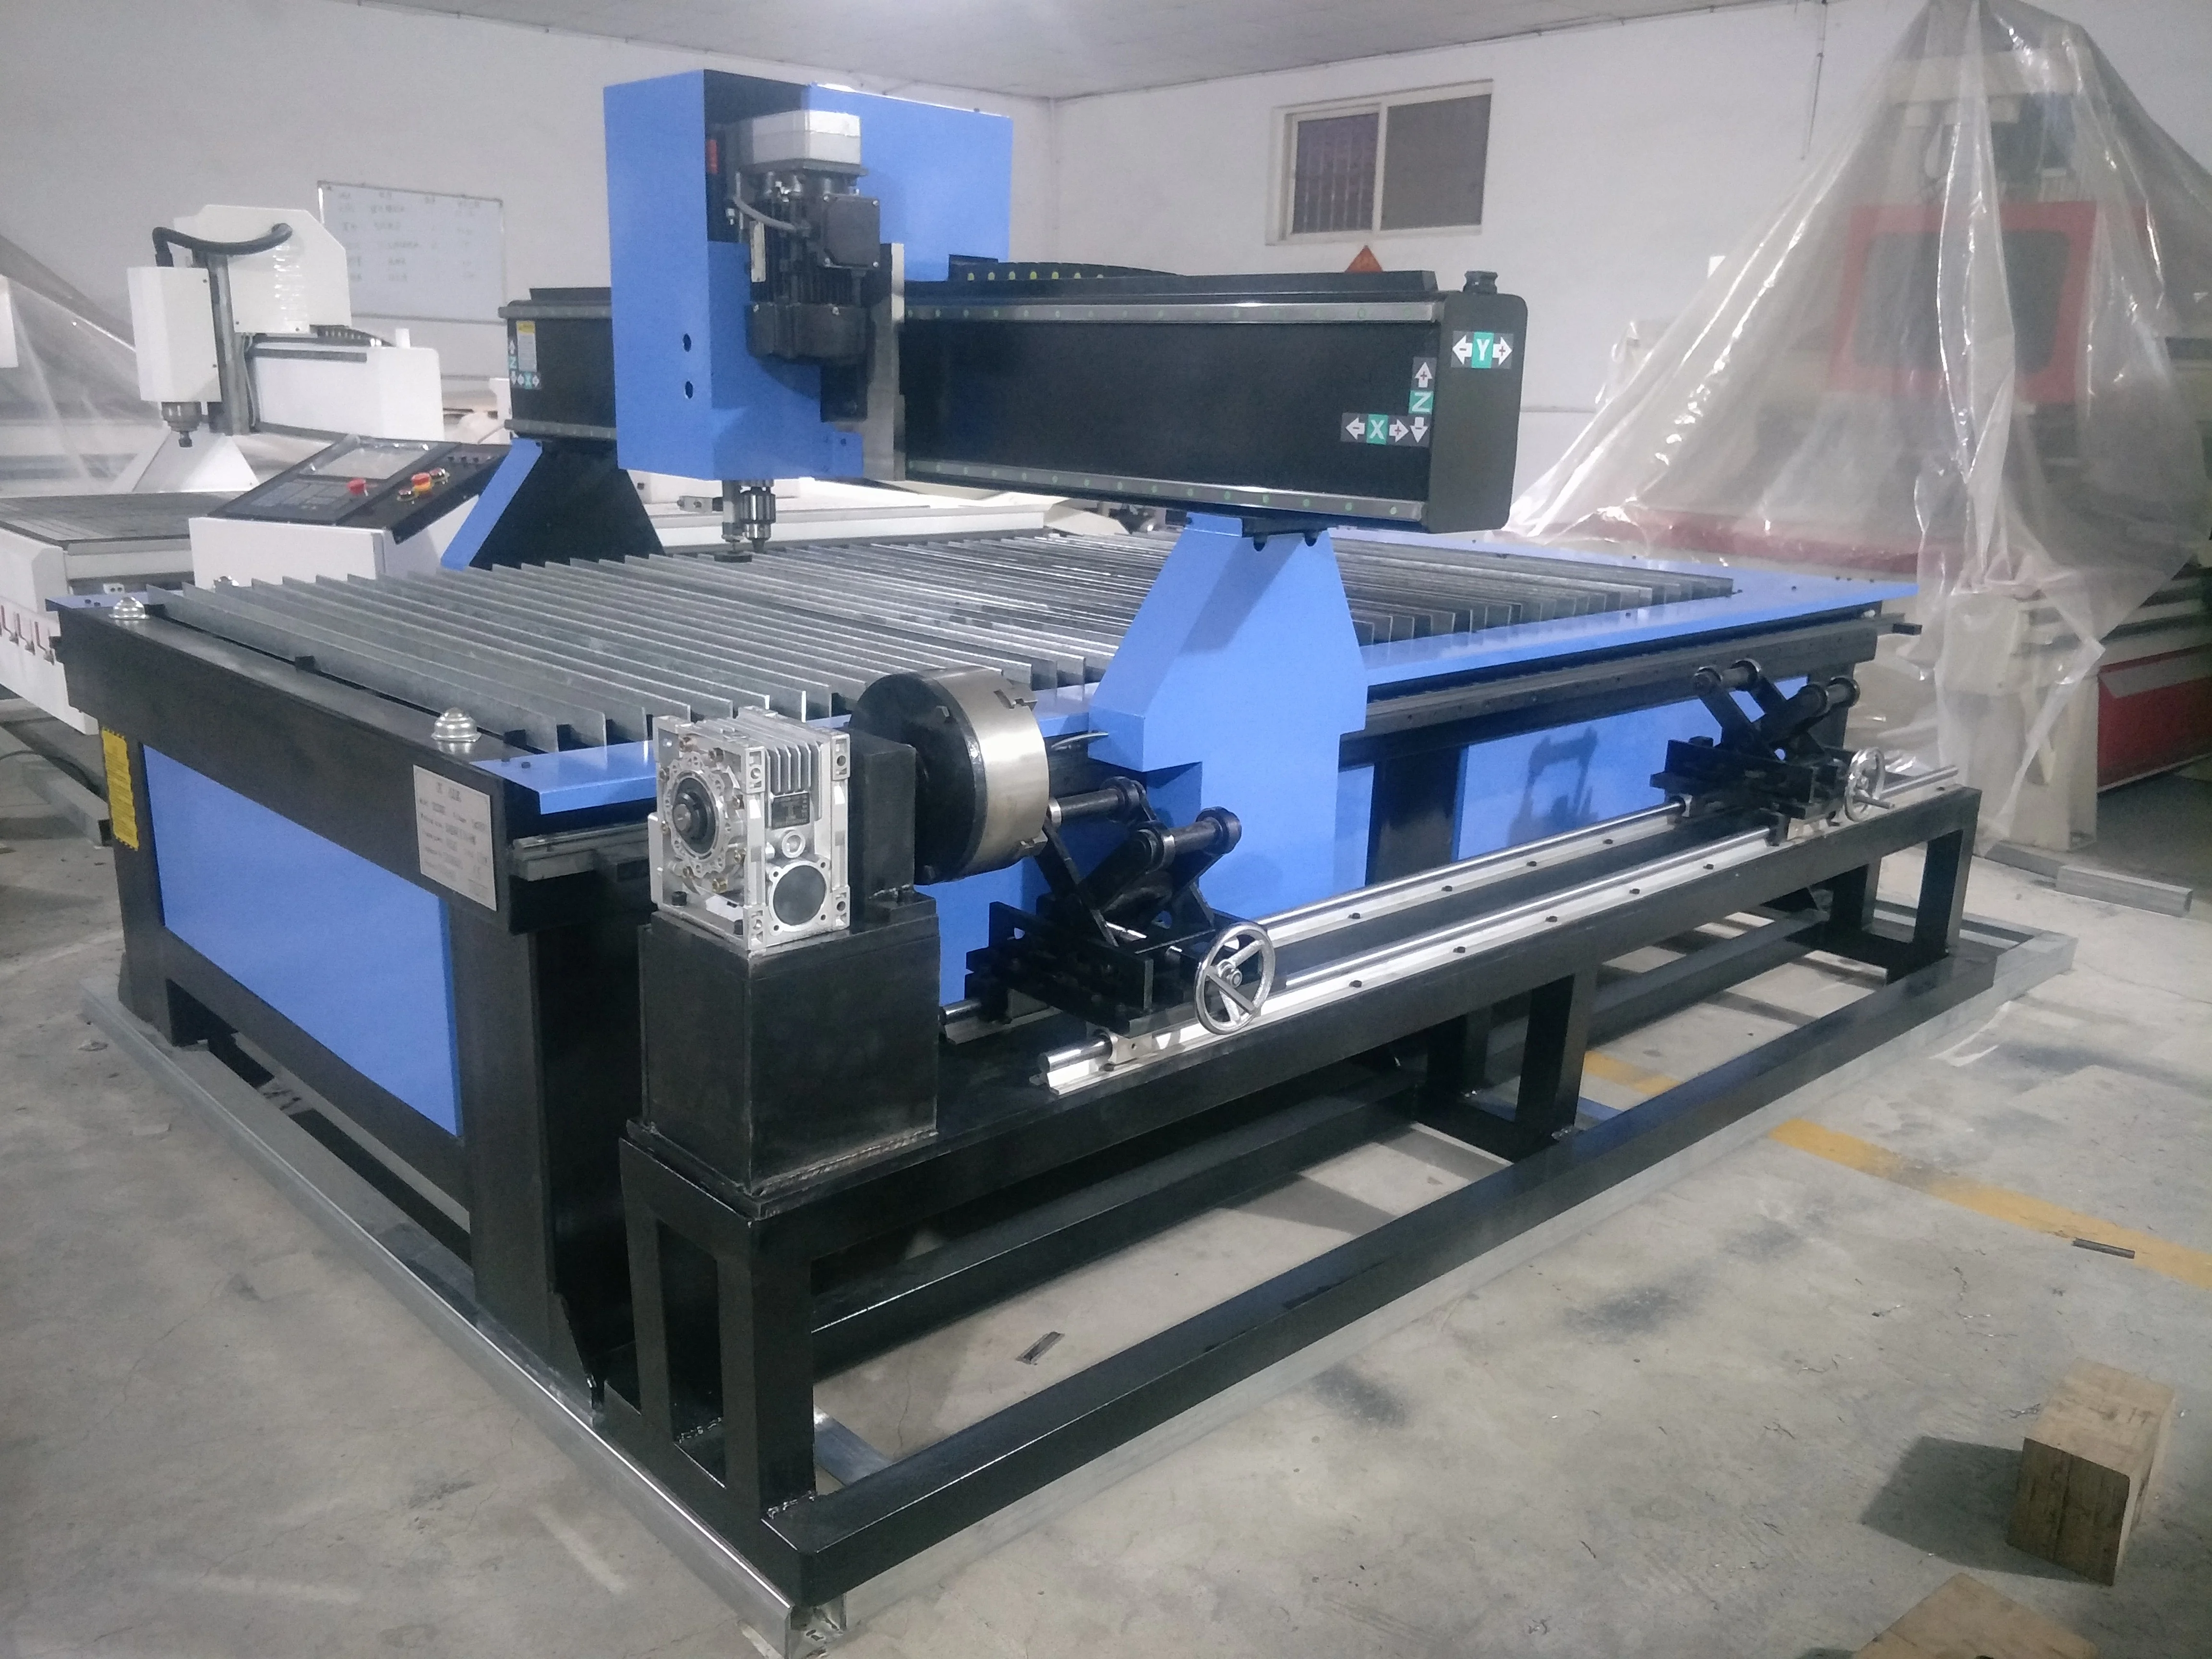 

2020 newly designed cnc plasma cutter used plasma cutting tables for metal engraving 1325 1530 galvanized cuting machine